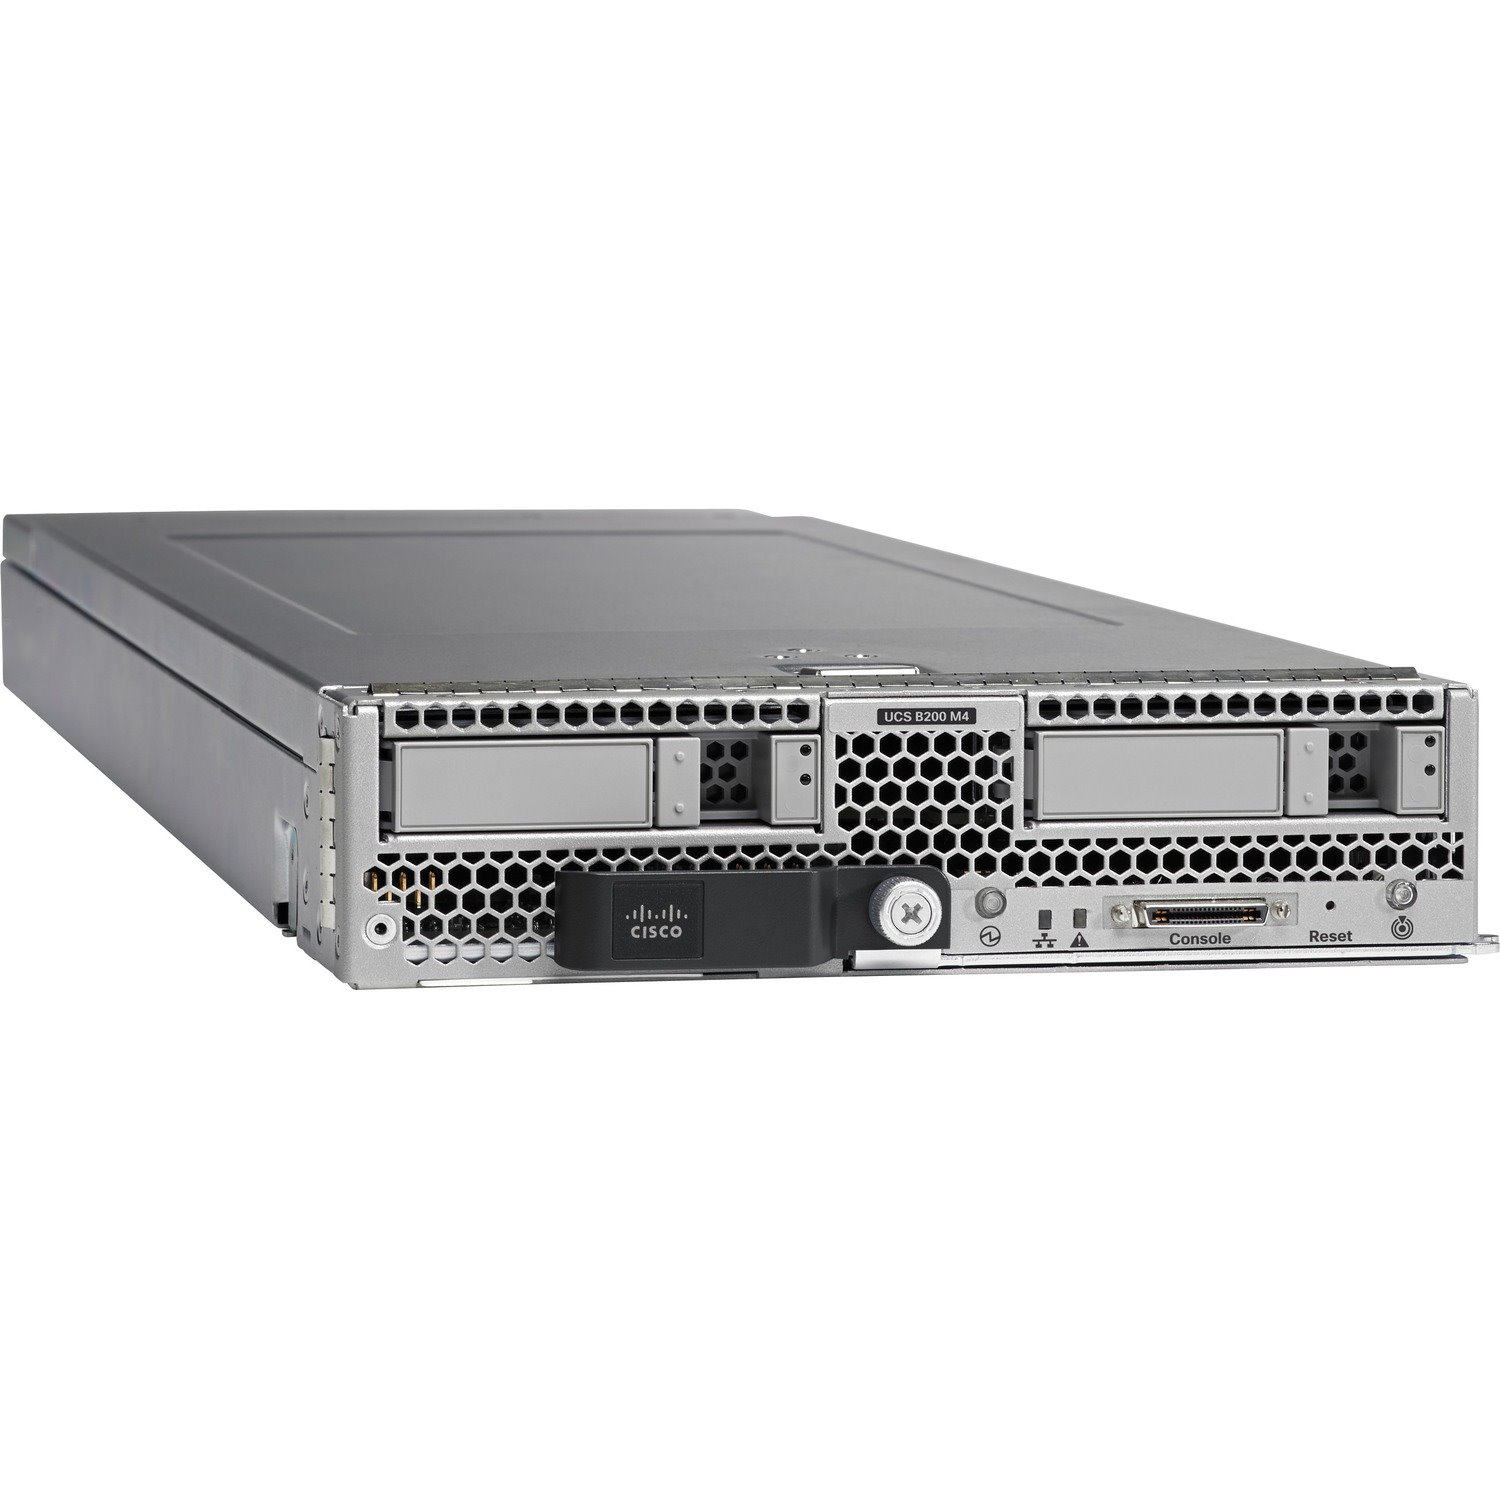 Cisco B200 M4 Blade Server - 2 x Intel Xeon E5-2670 v3 2.30 GHz - 256 GB RAM - 12Gb/s SAS Controller